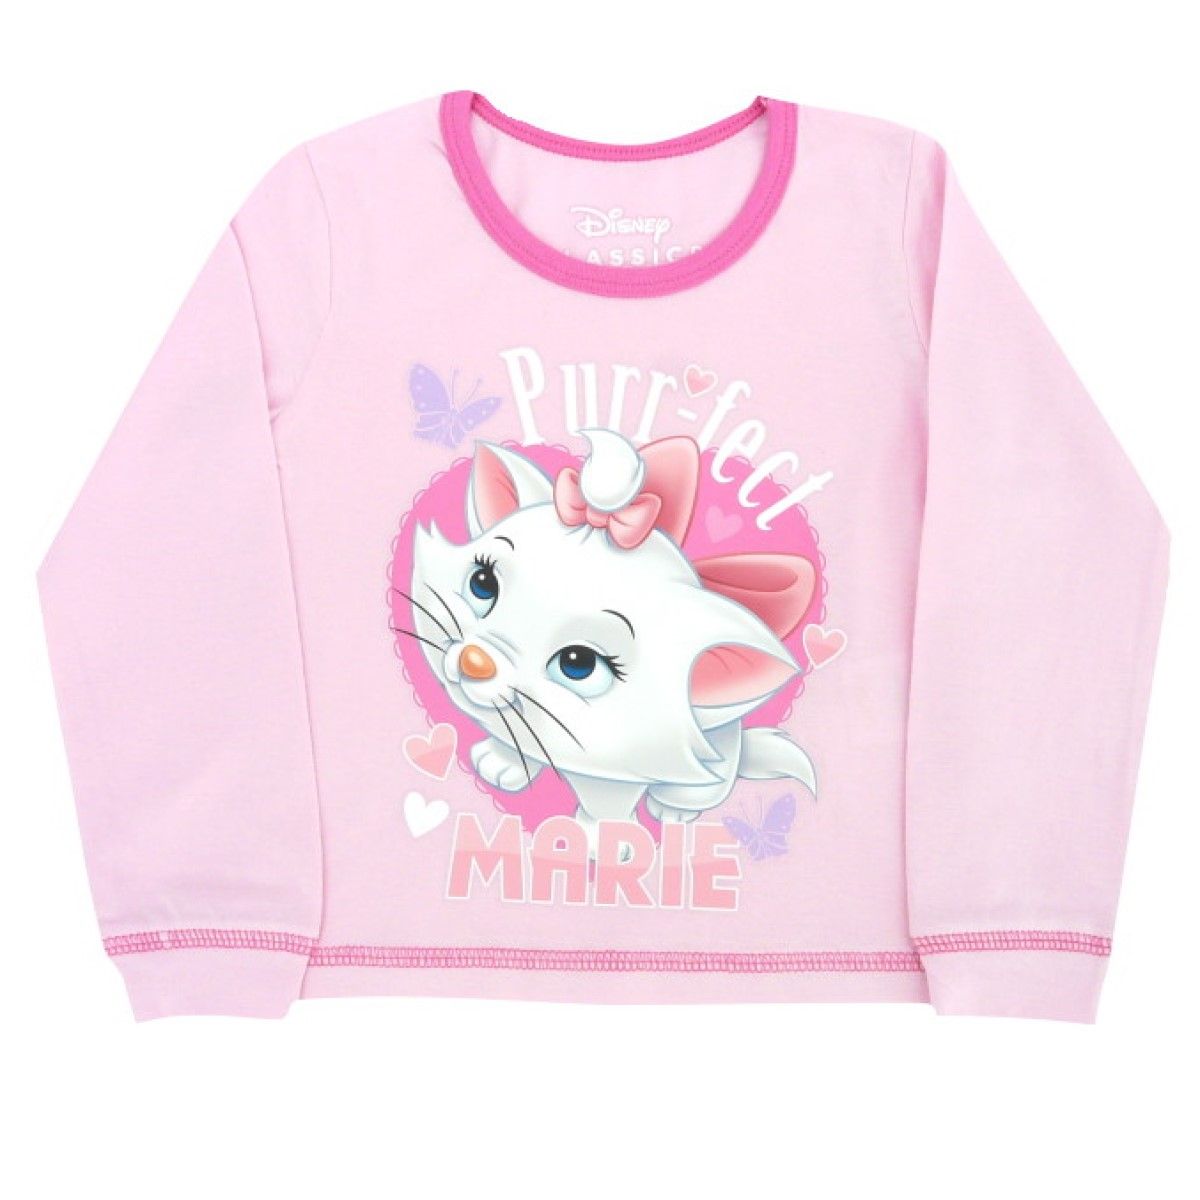 Disney Aristocats "Purr-fect" Girls Pyjamas